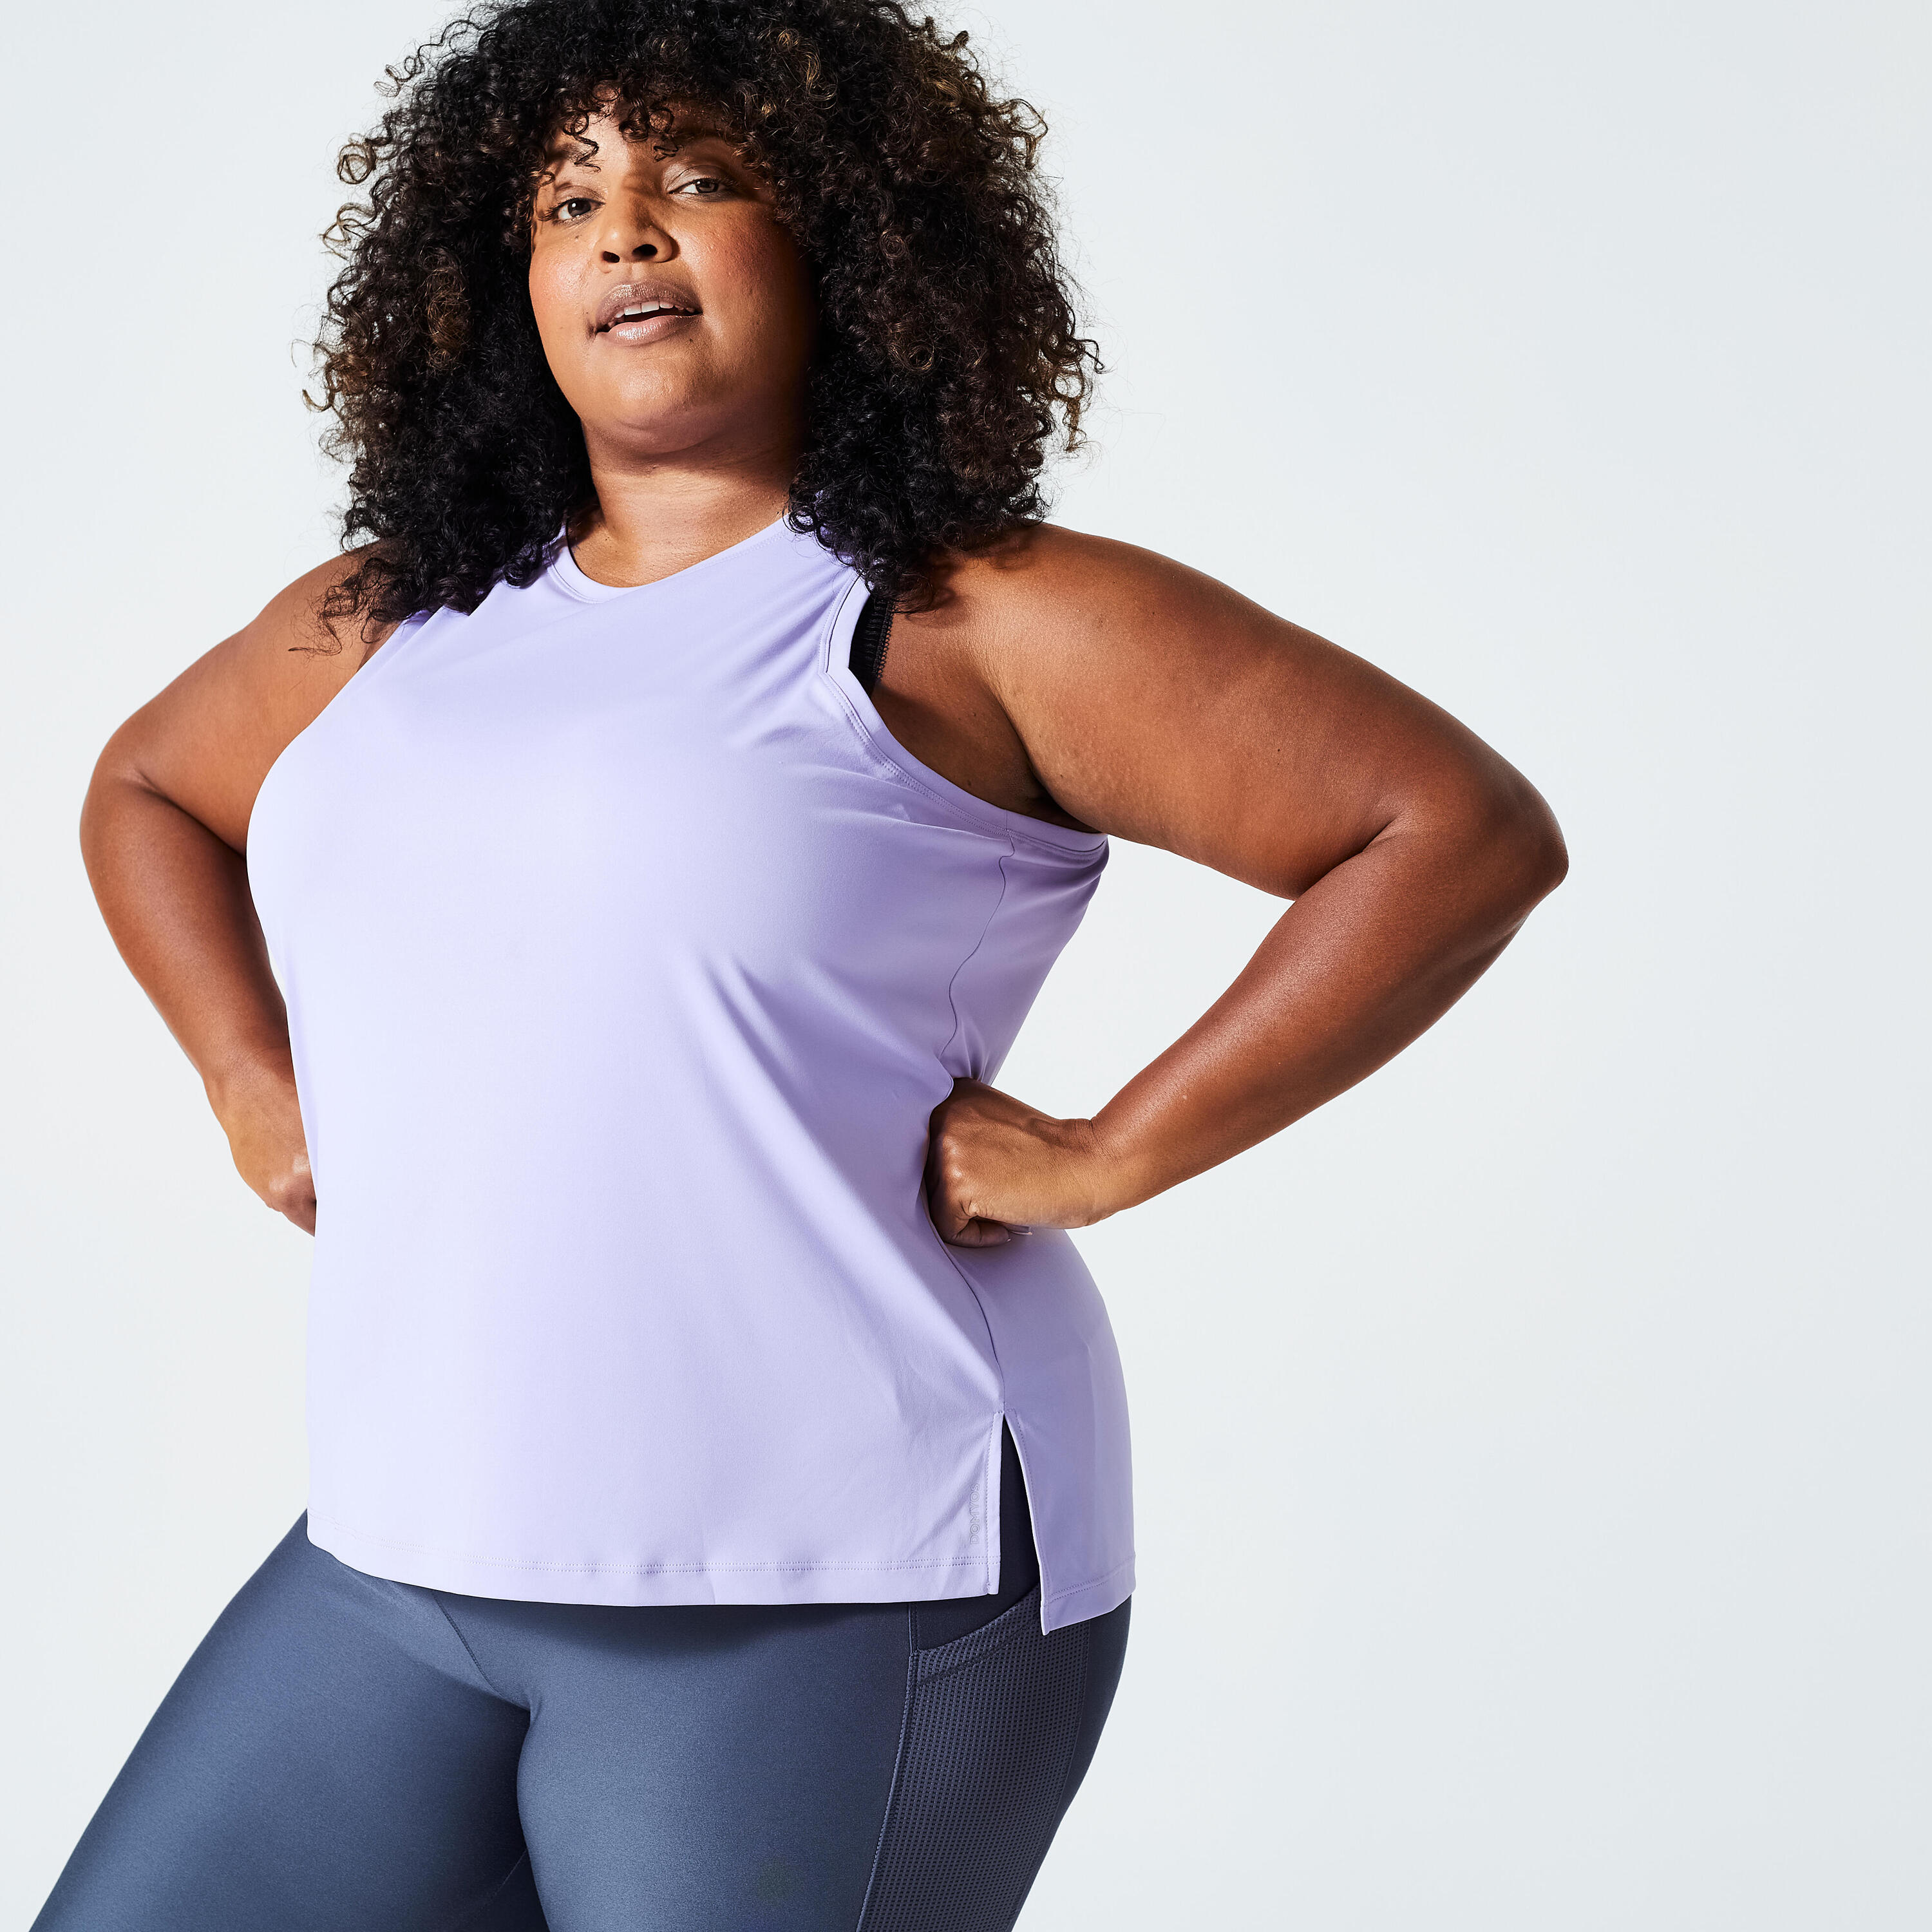 DOMYOS Women's Cardio Fitness Plus Sized Straight Cut Tank Top - Purple